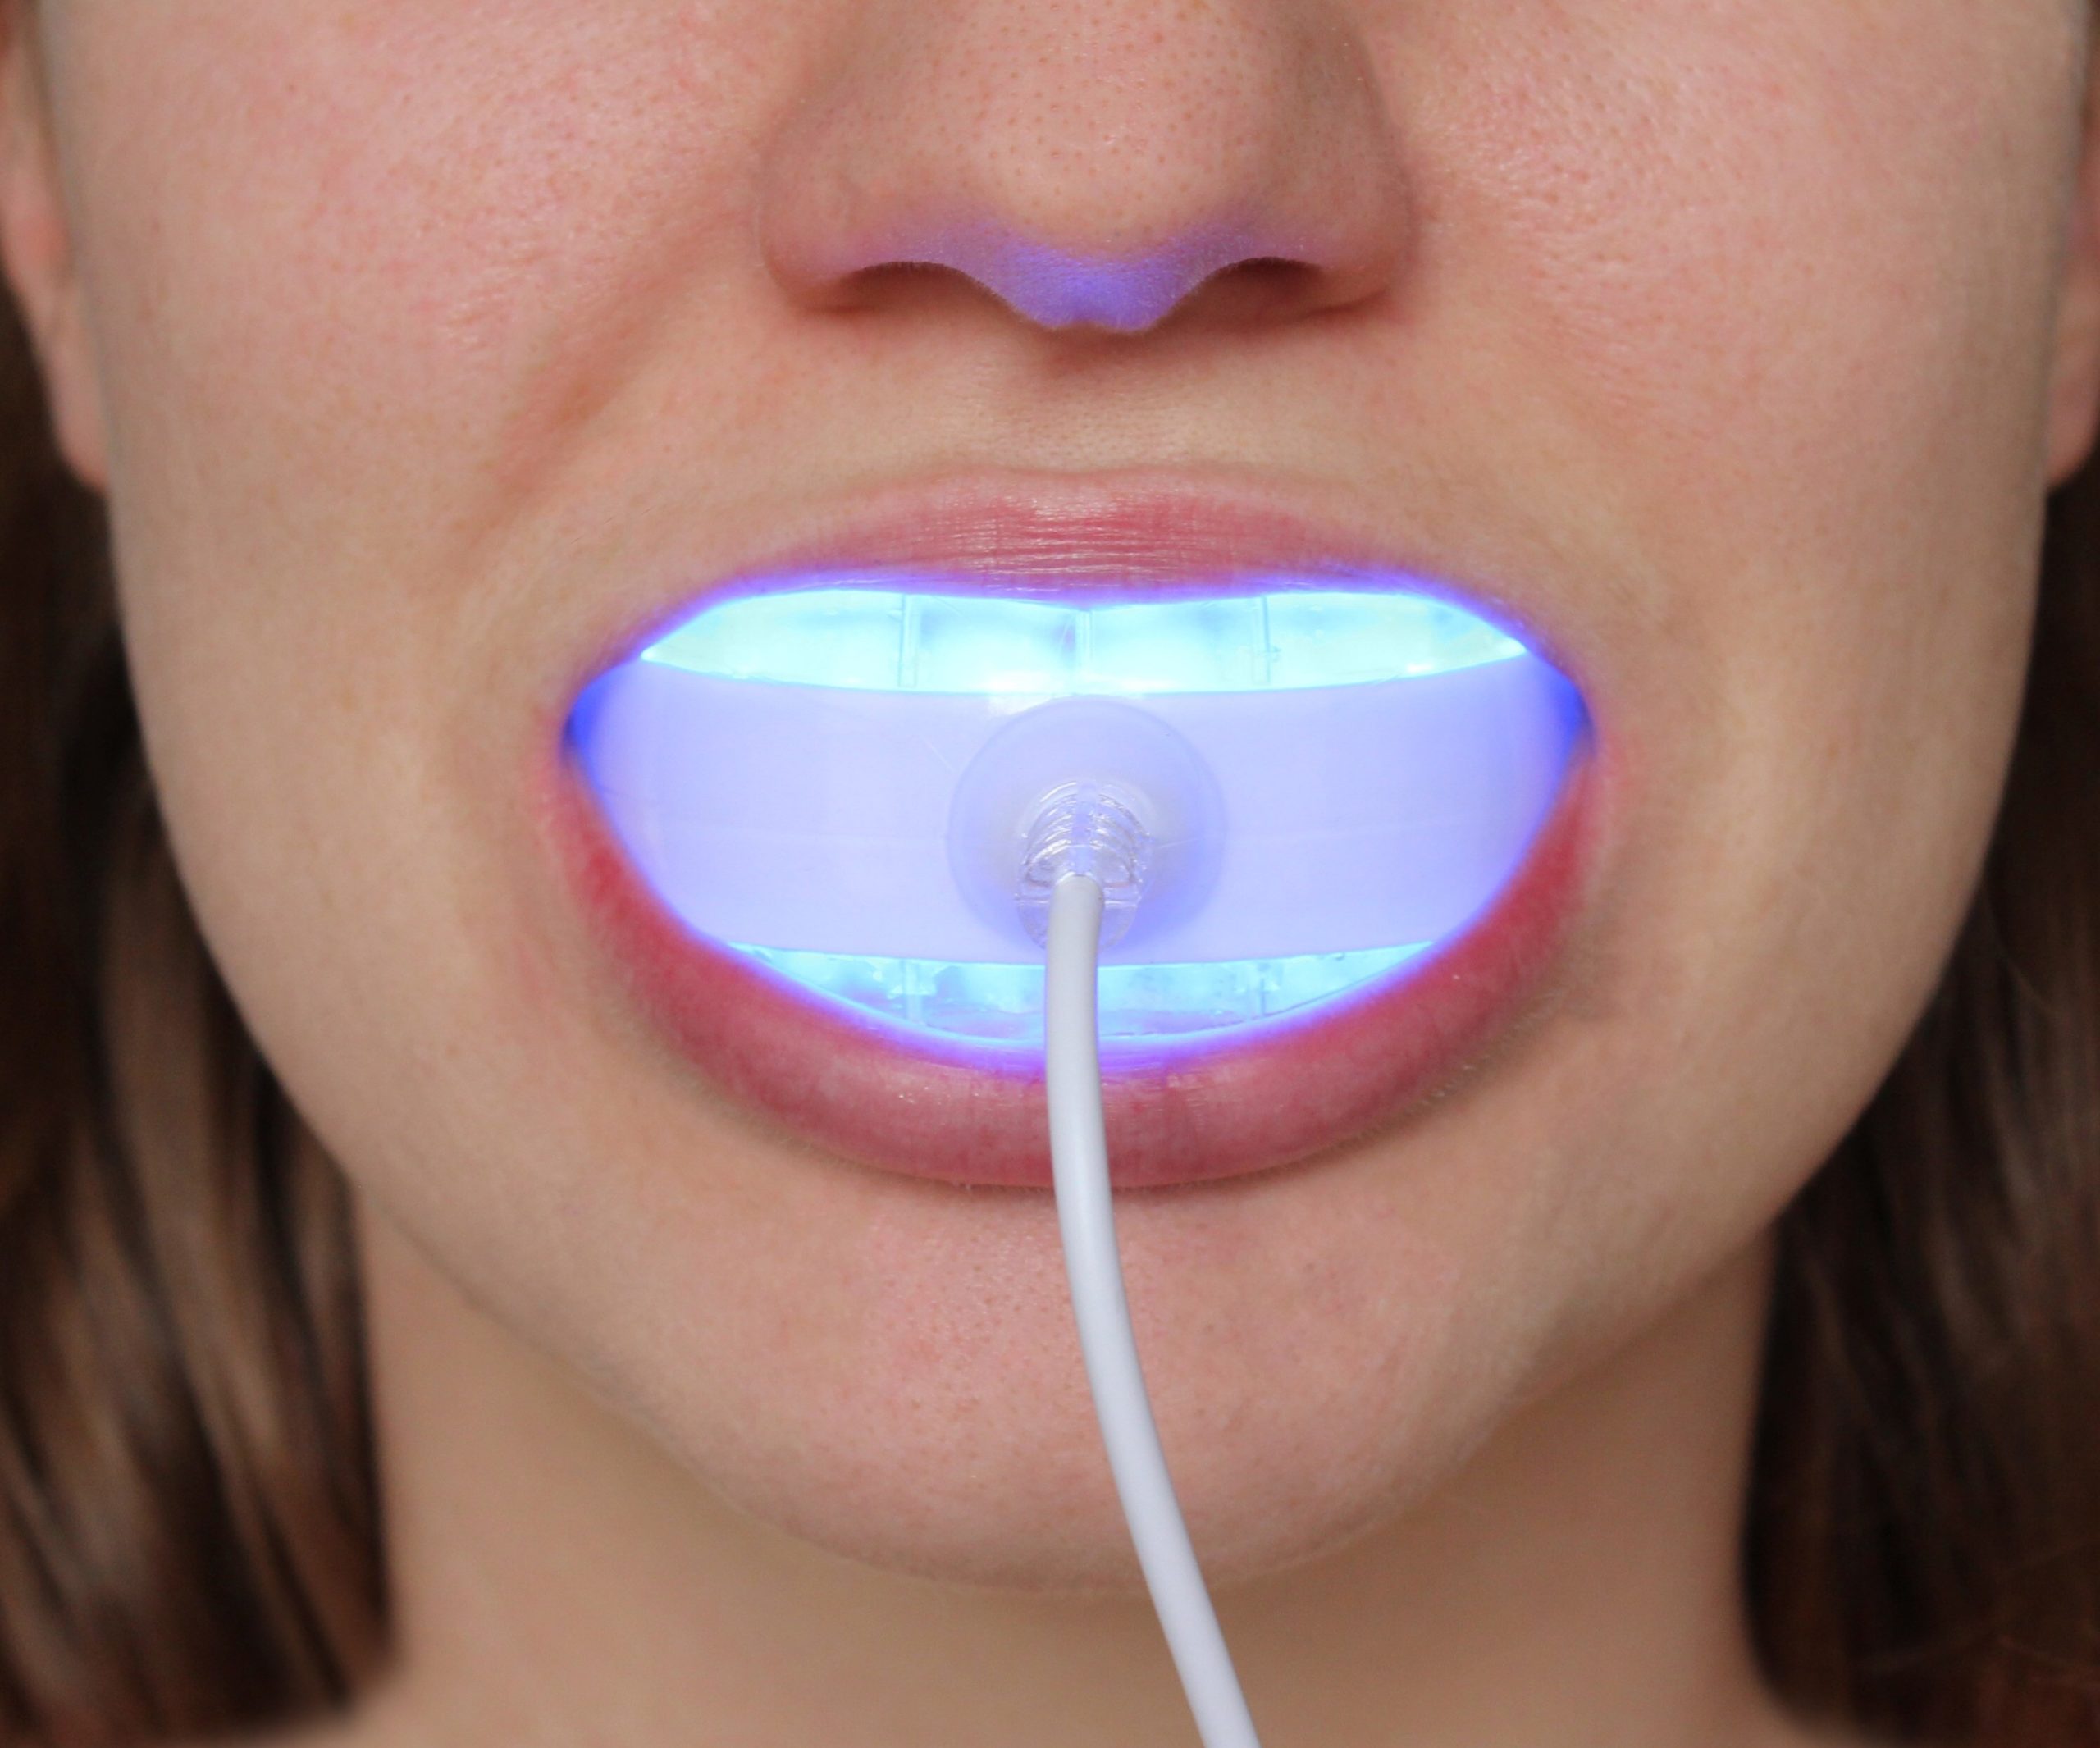 Is blue light ok for teeth?